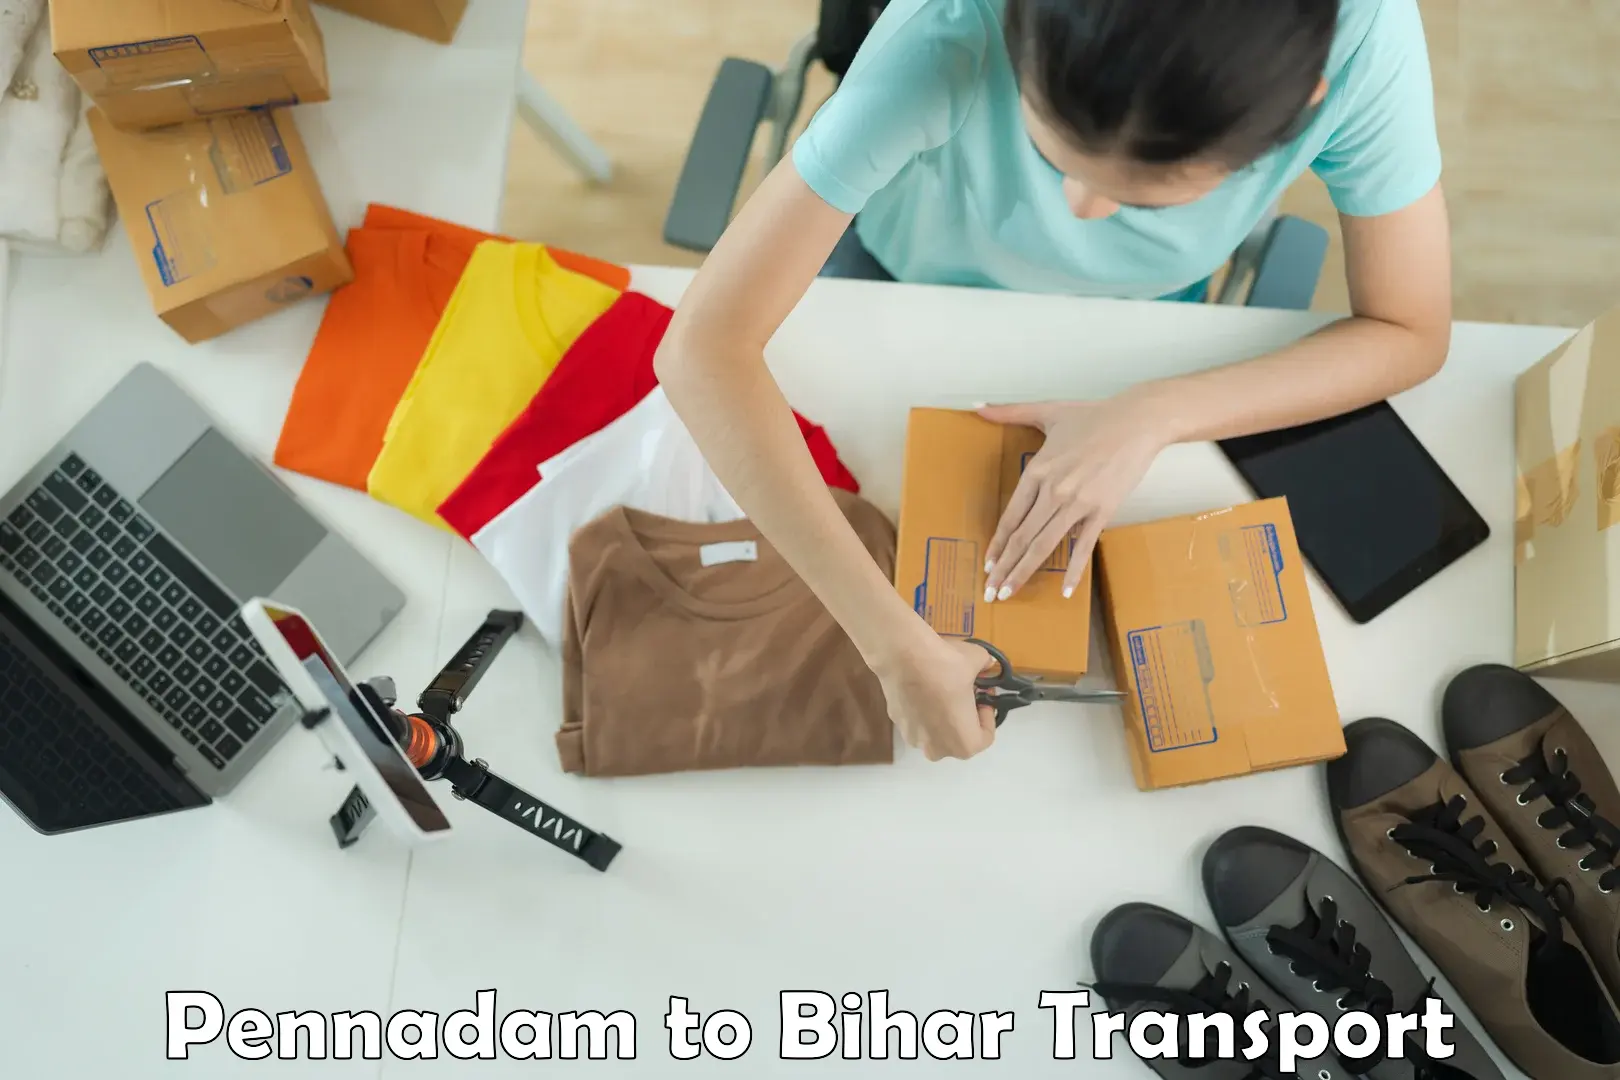 Transport in sharing Pennadam to Biraul